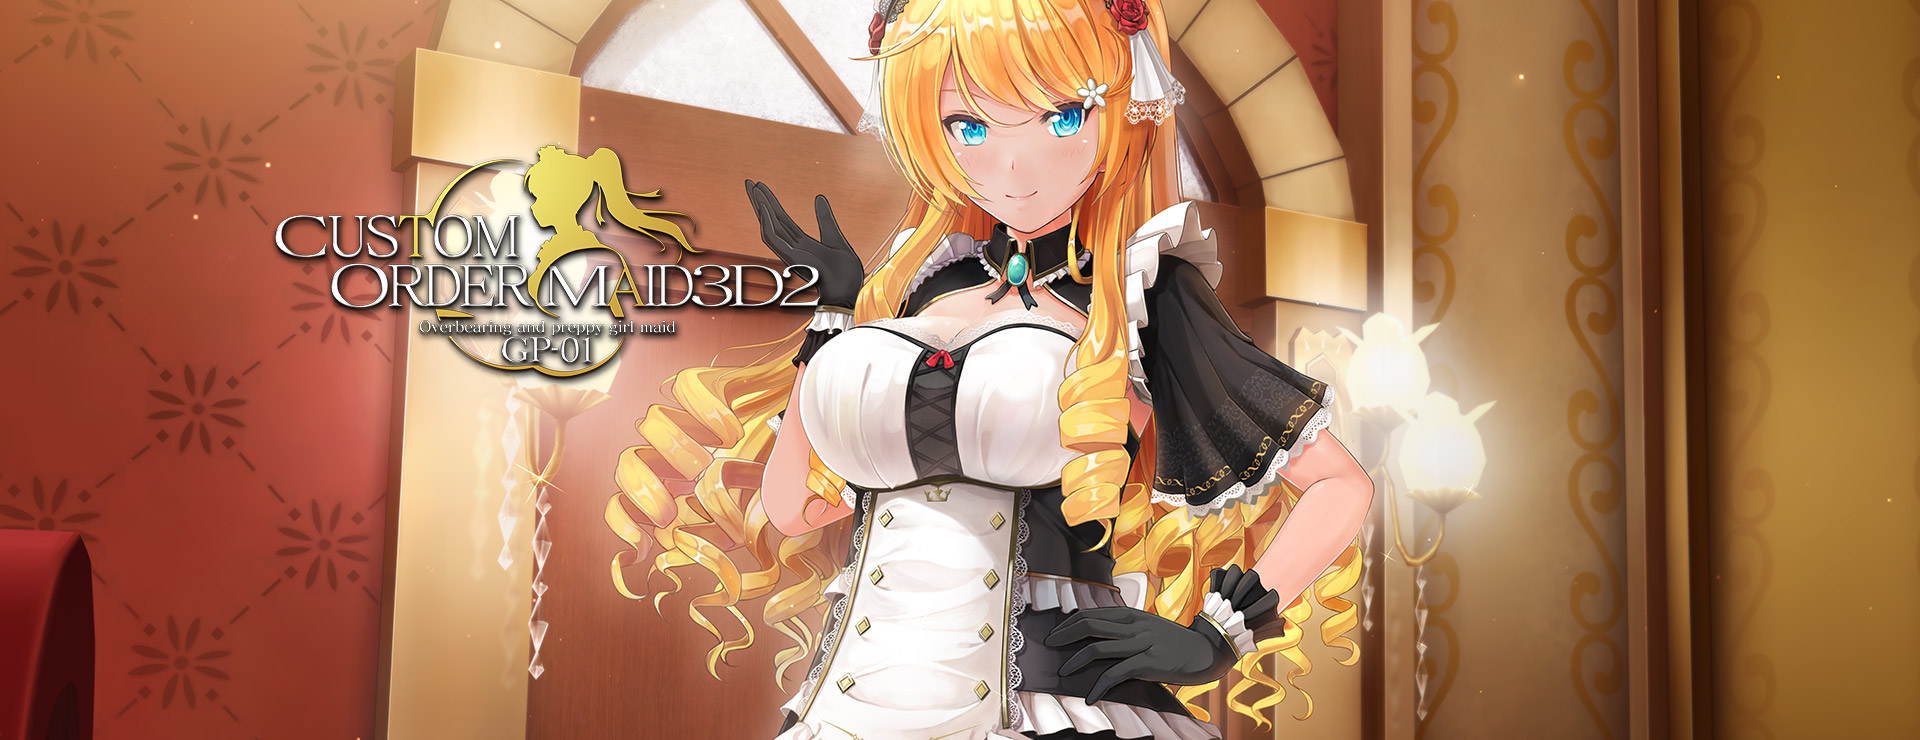 Custom Order Maid 3D2: Overbearing and Preppy Girl Maid GP-01 - 仿真游戏 遊戲